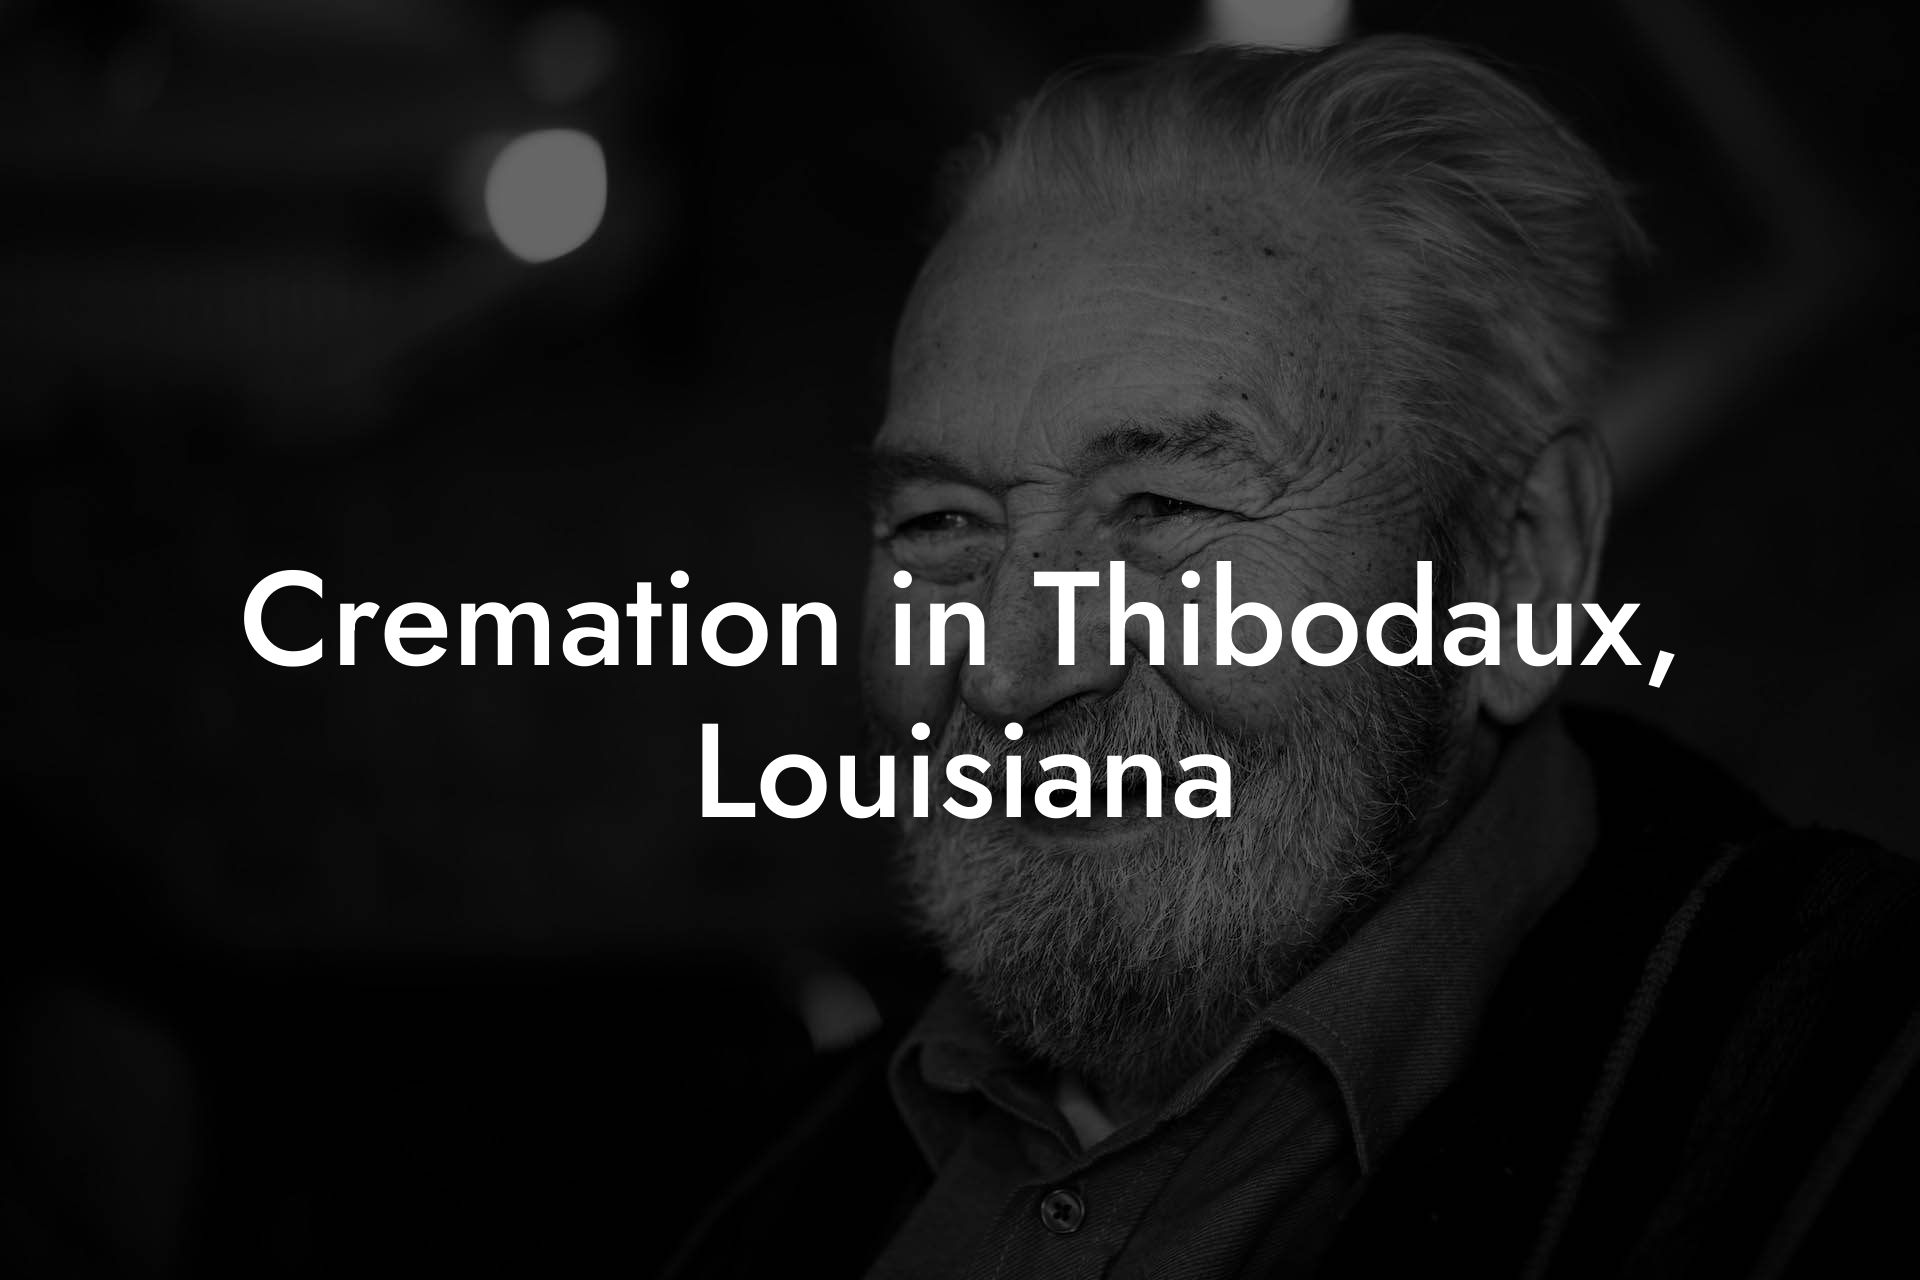 Cremation in Thibodaux, Louisiana